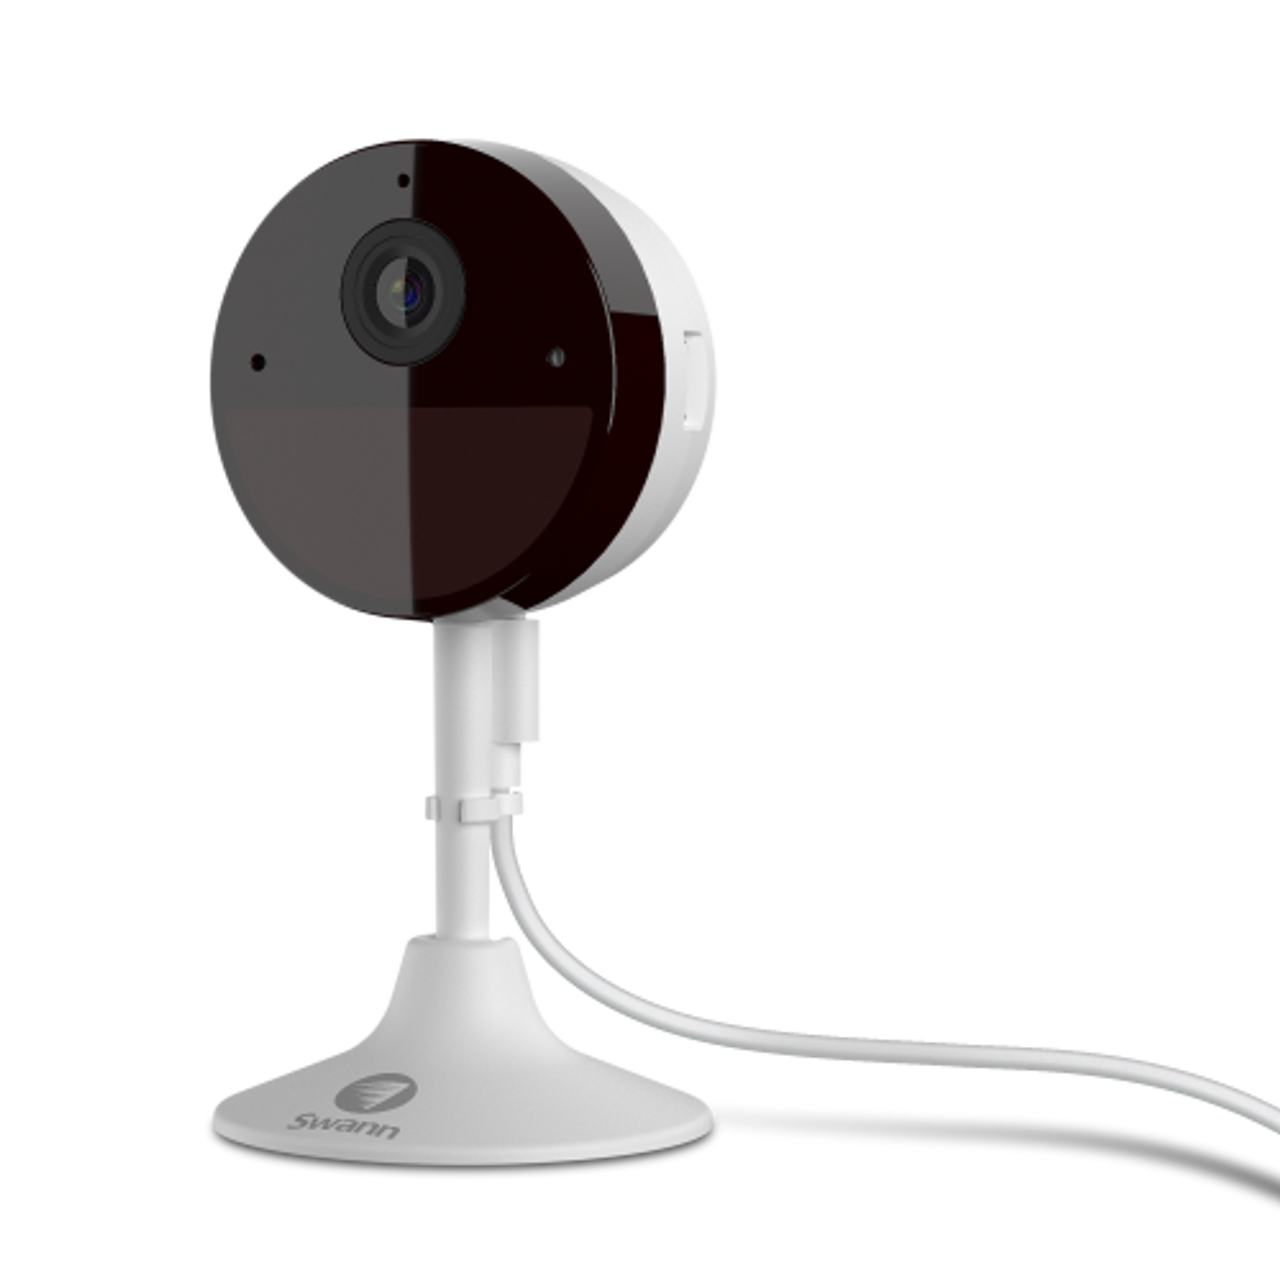 2ki indoor wi-fi security camera - swifi-2kicam   tech supply shed